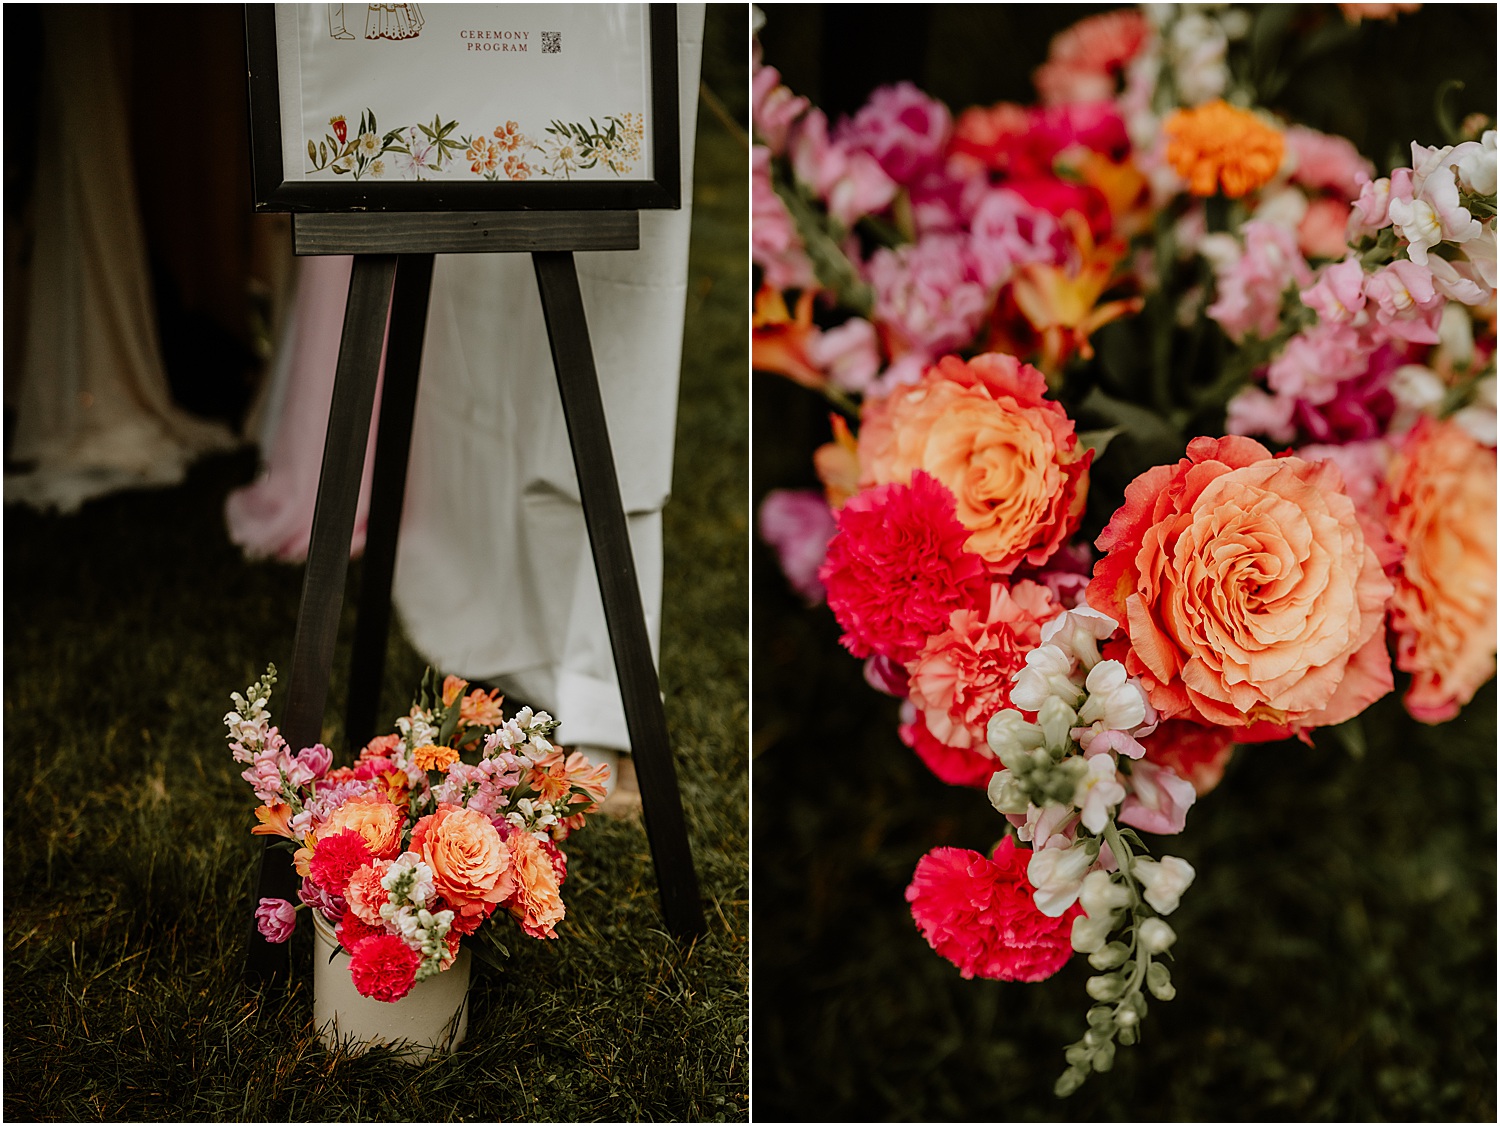 Stunning reception floral arrangements for Maine barn wedding